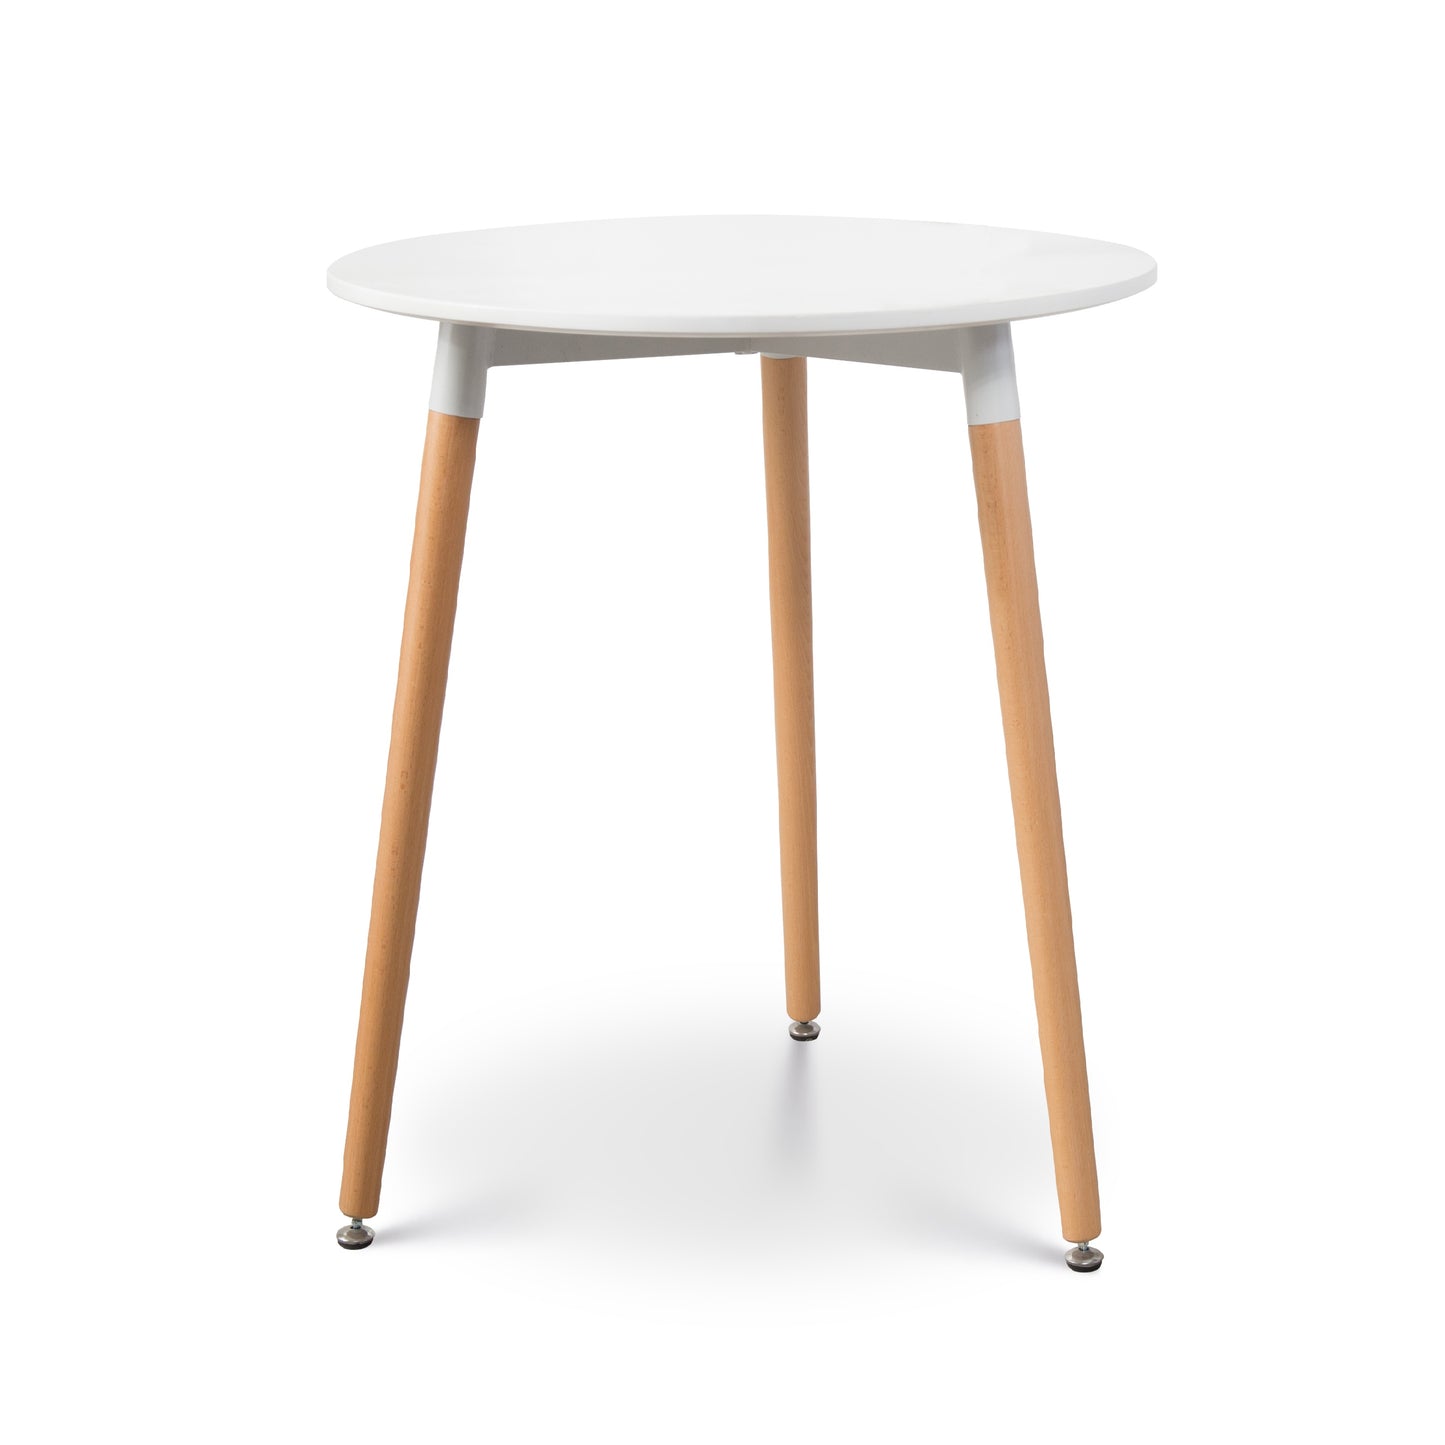 Petite table ronde JENY blanche style scandinave Ø60 cm